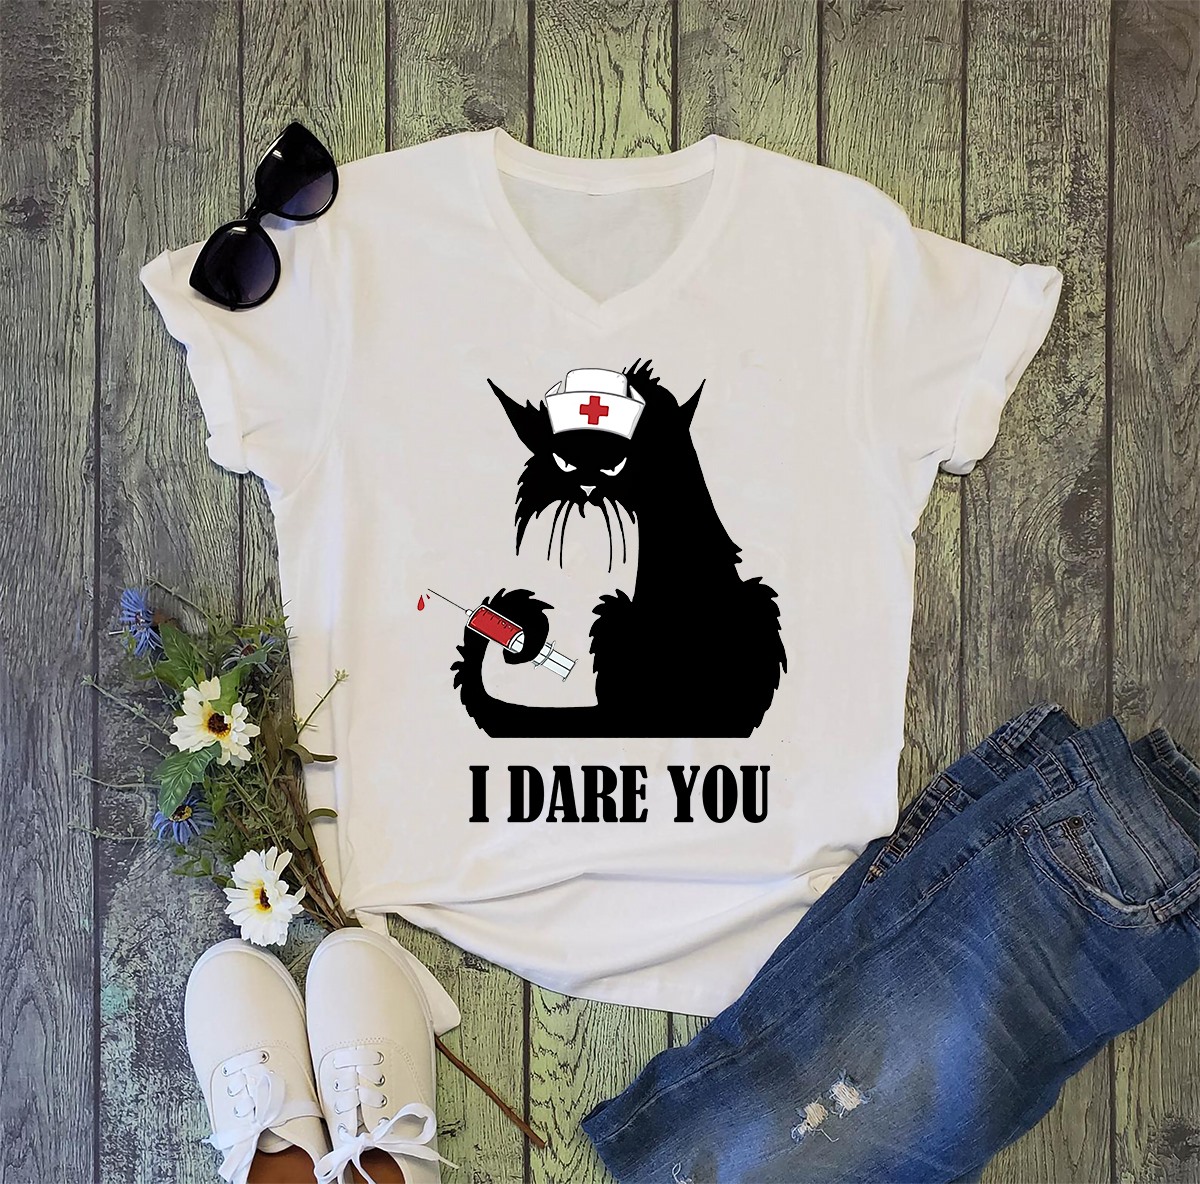 I dare you - Nurse and cat, nurse the job